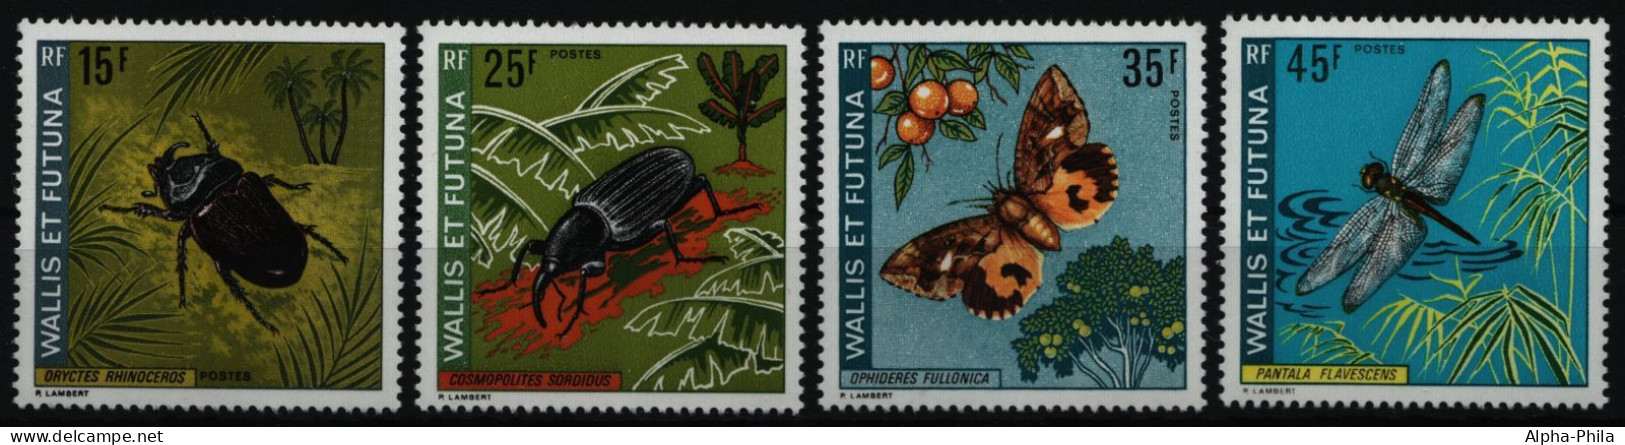 Wallis & Futuna 1974 - Mi-Nr. 254-257 ** - MNH - Insekten / Insects - Nuevos